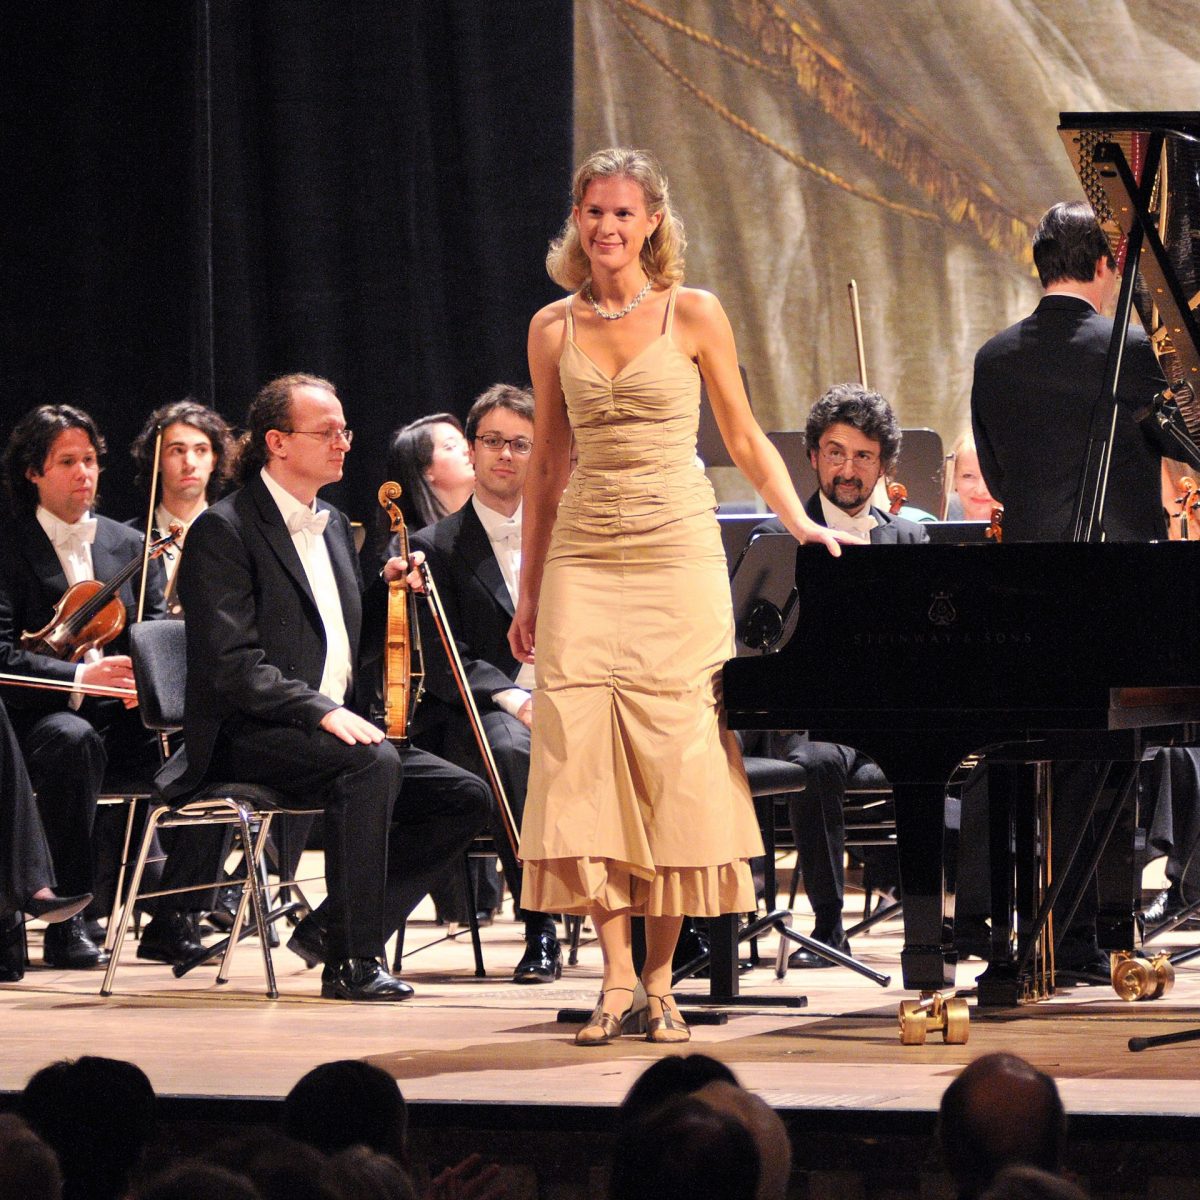 TUM Alumna Sylvia Danksreiter with orchestra on stage.